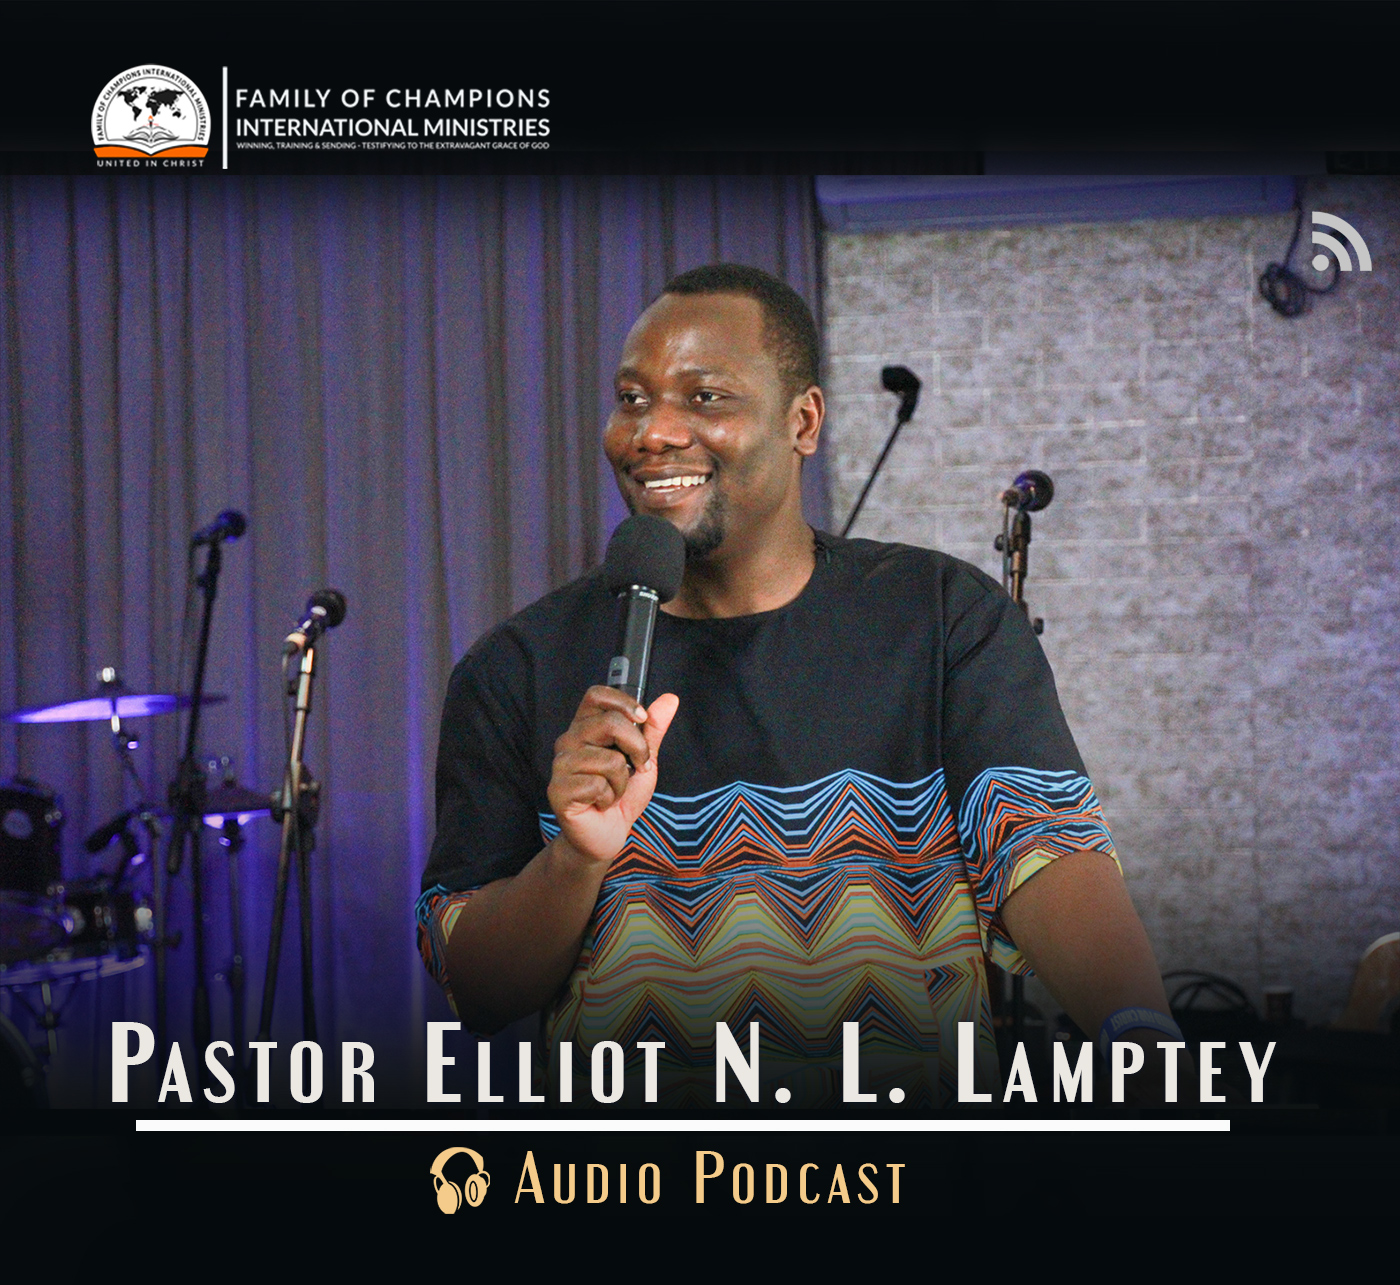 Pastor Elliot N. L. Lamptey